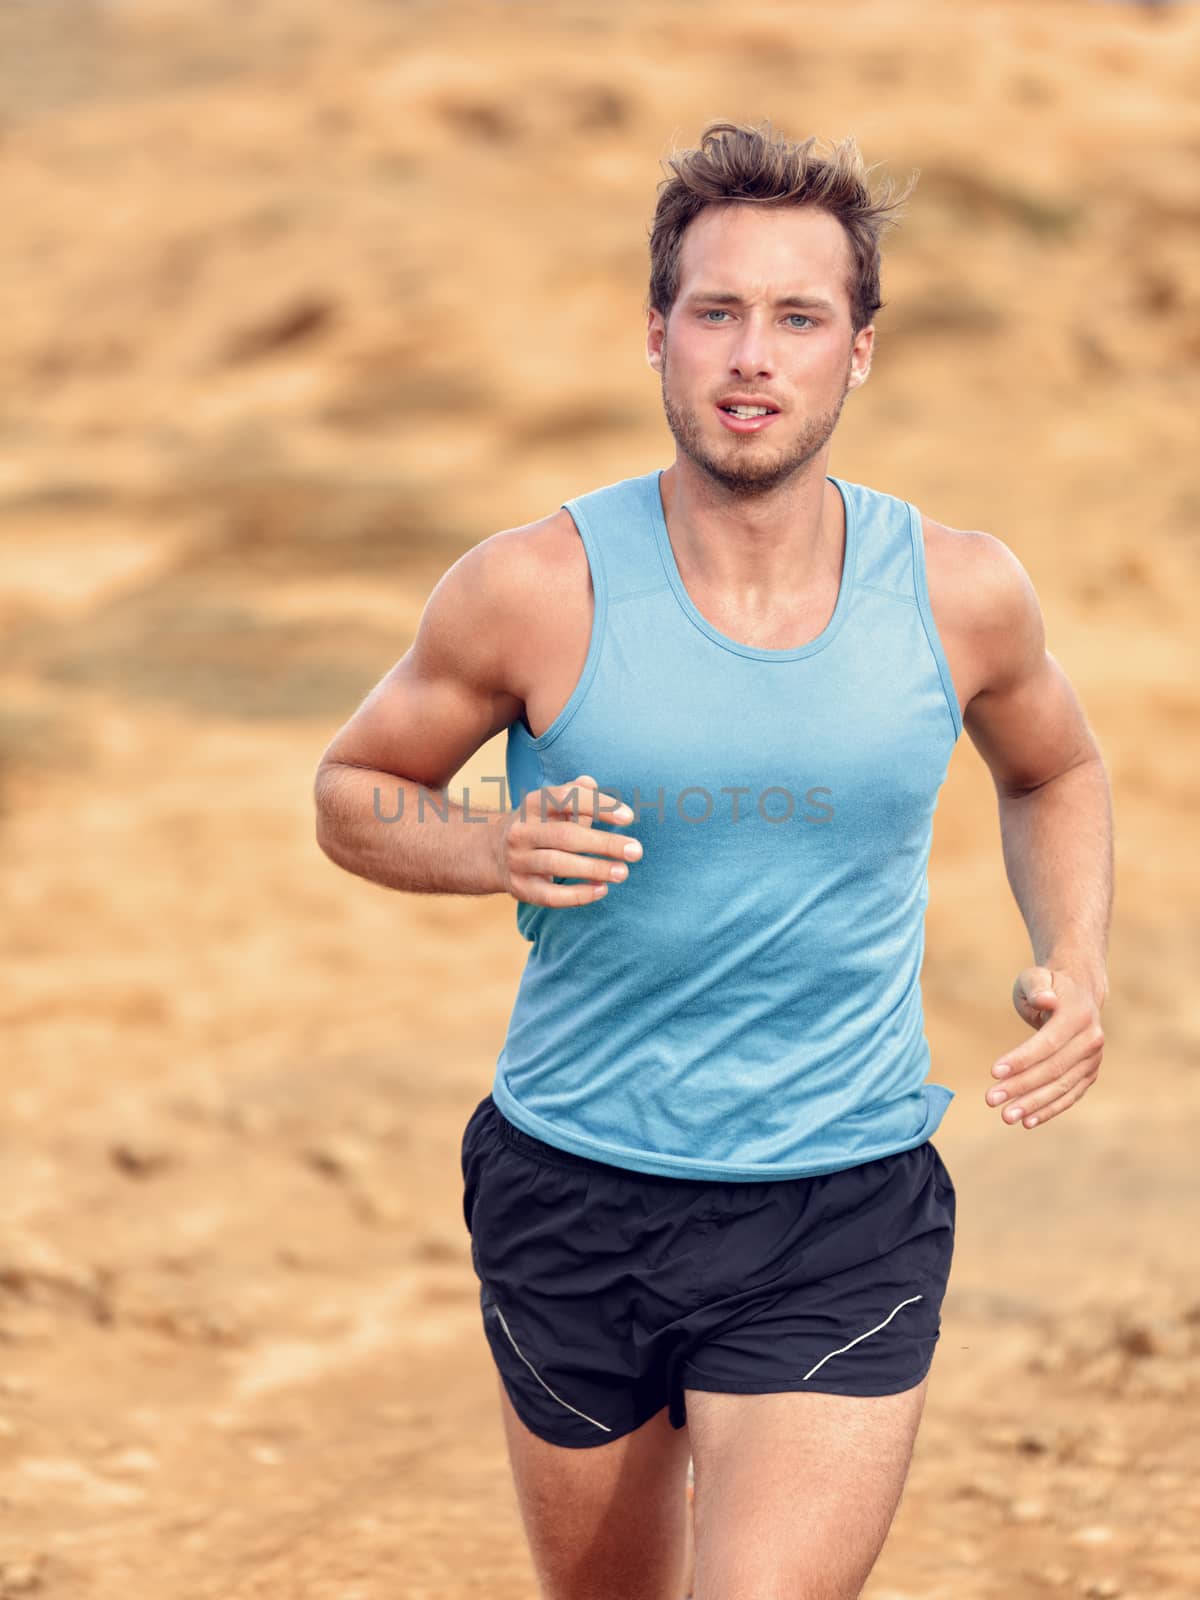 Trail runner training cardio running on mountain by Maridav